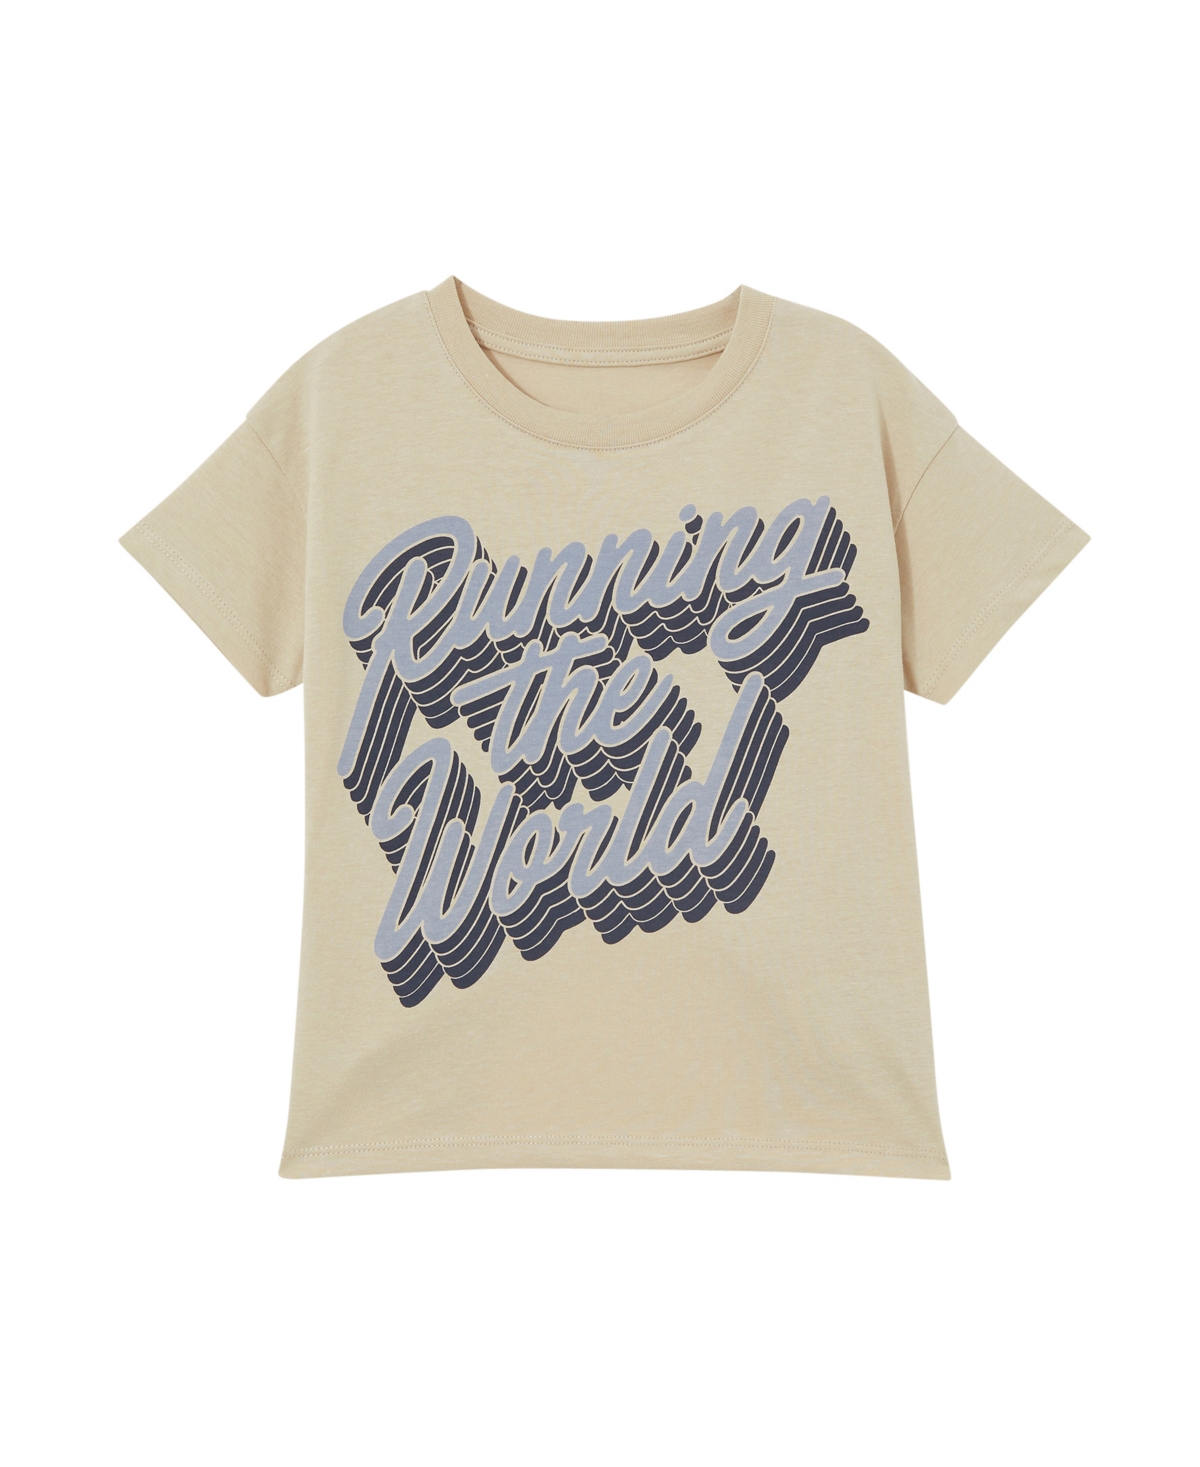 Cotton On Babies' Toddler Girls Poppy Short Sleeve Print T-shirt In Rainy Day,running The World